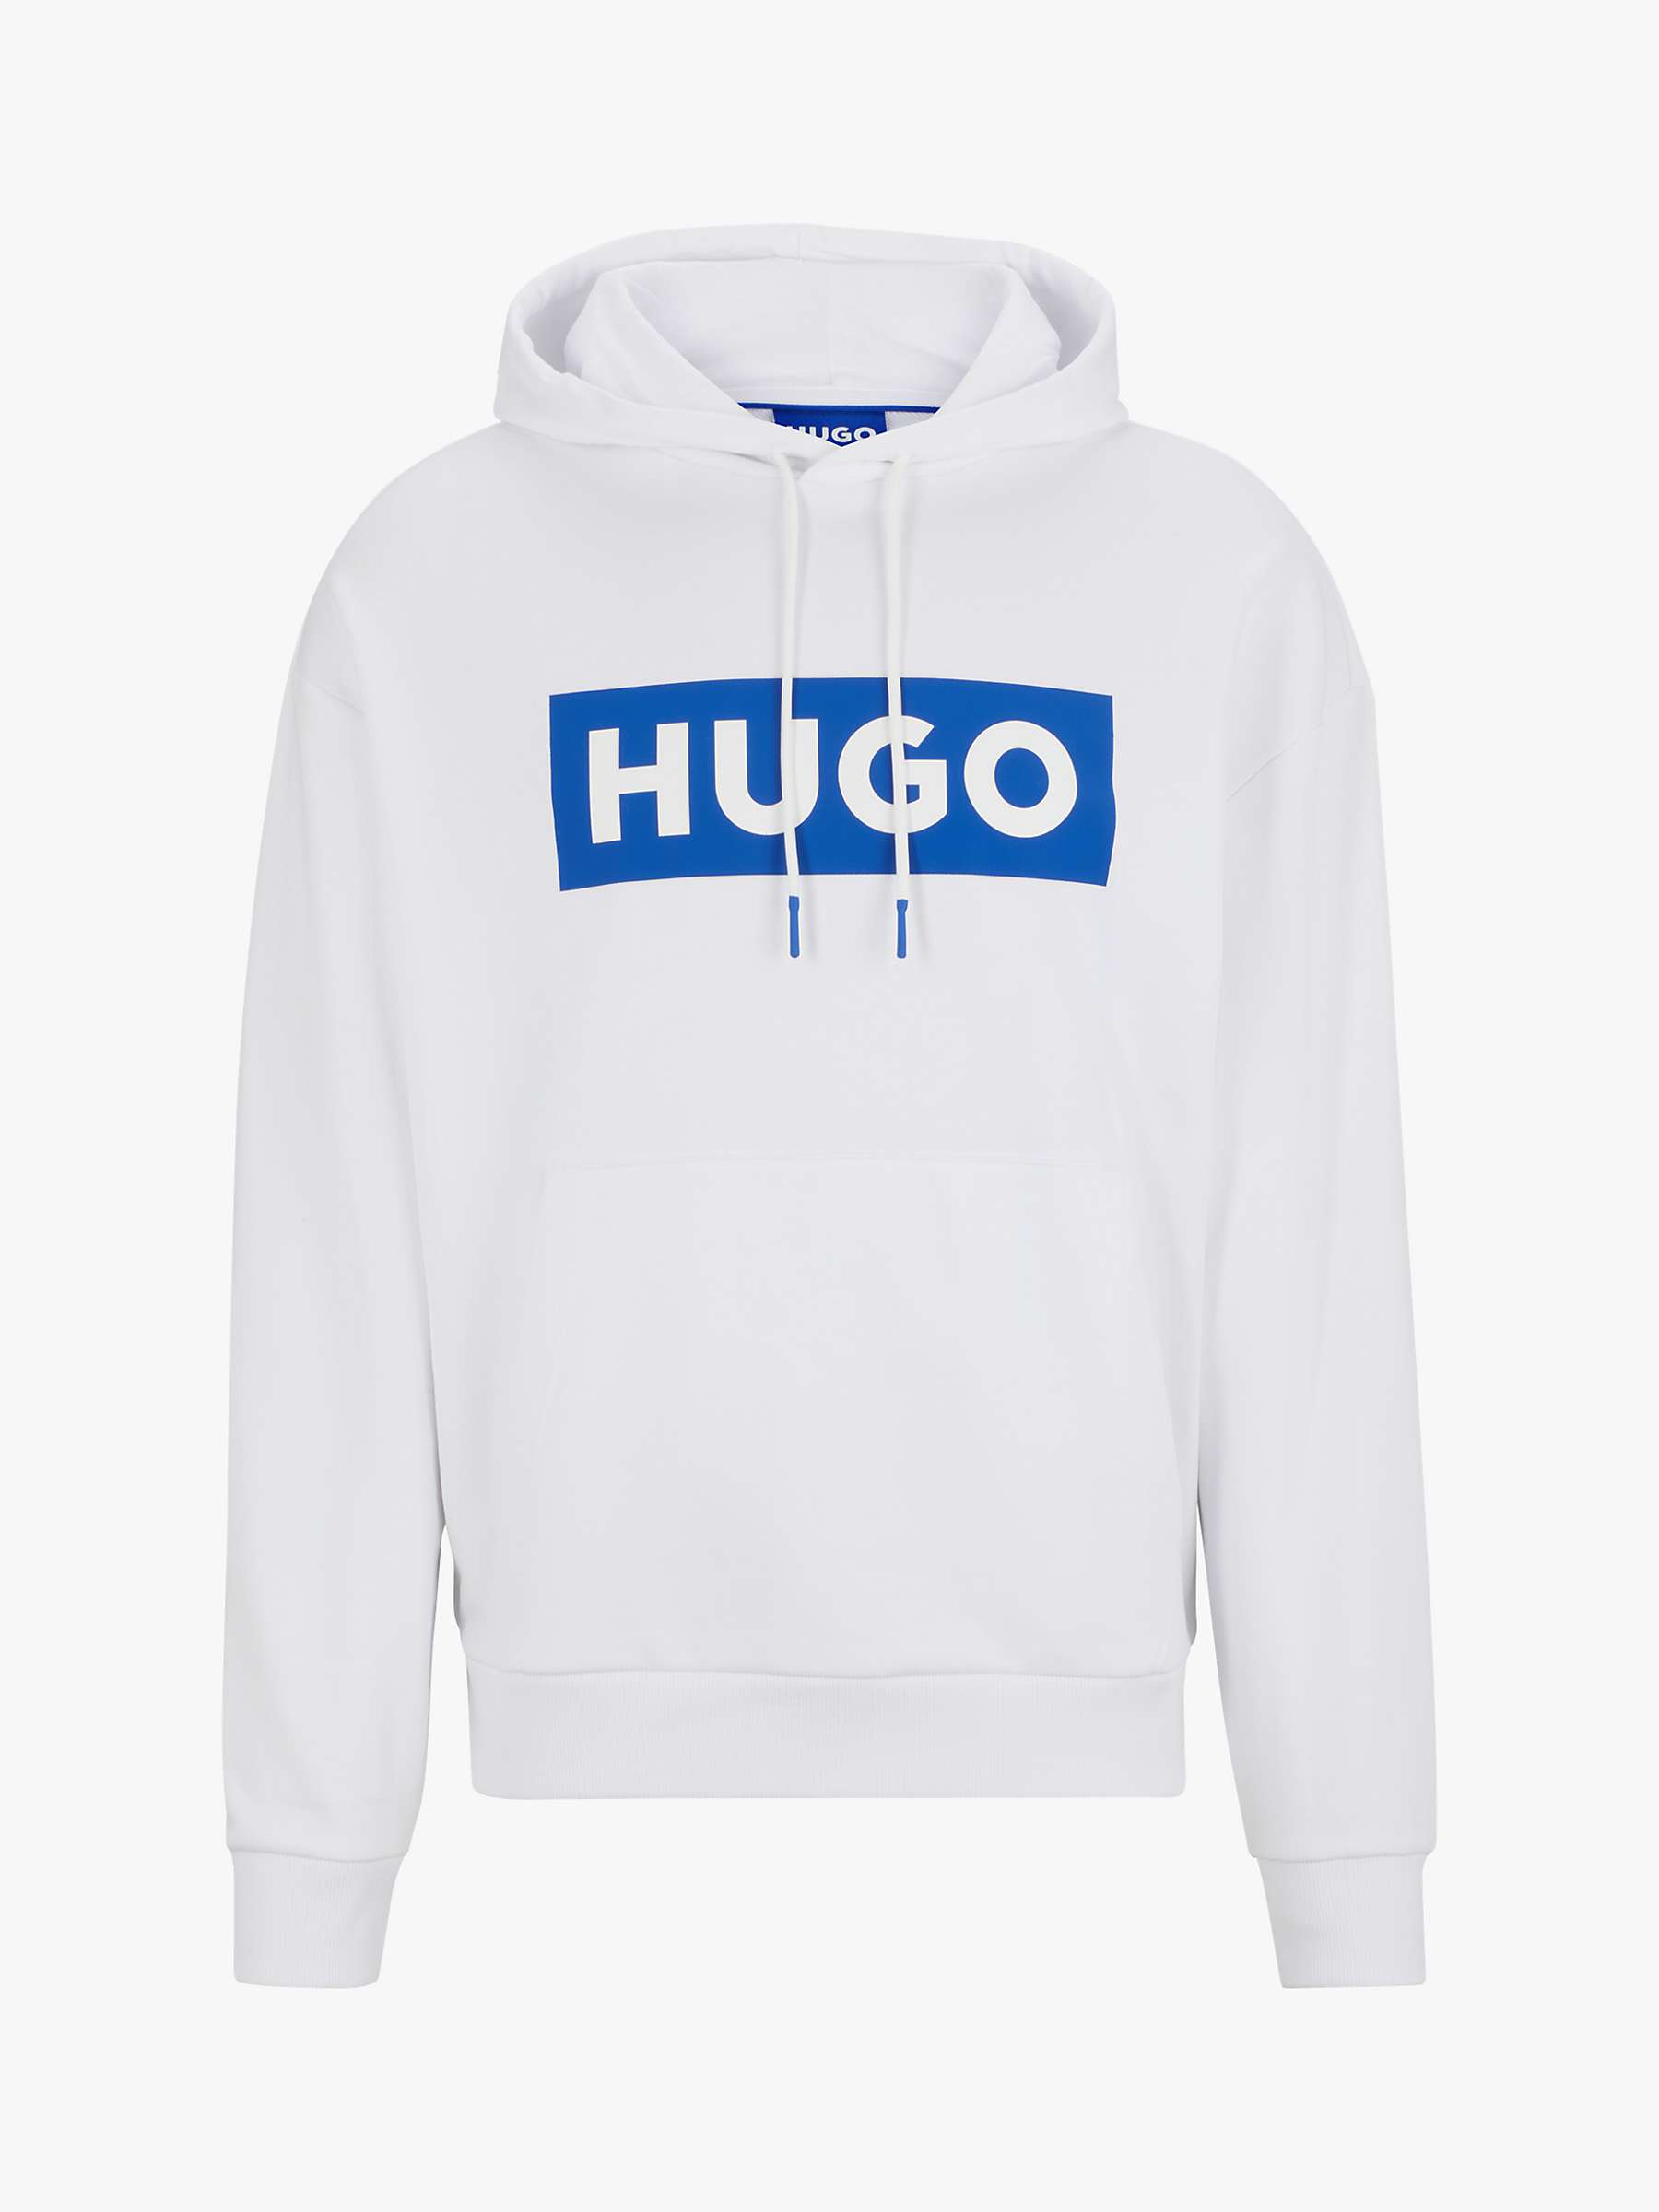 Buy HUGO Nalves 100 Hoodie, White/Blue Online at johnlewis.com